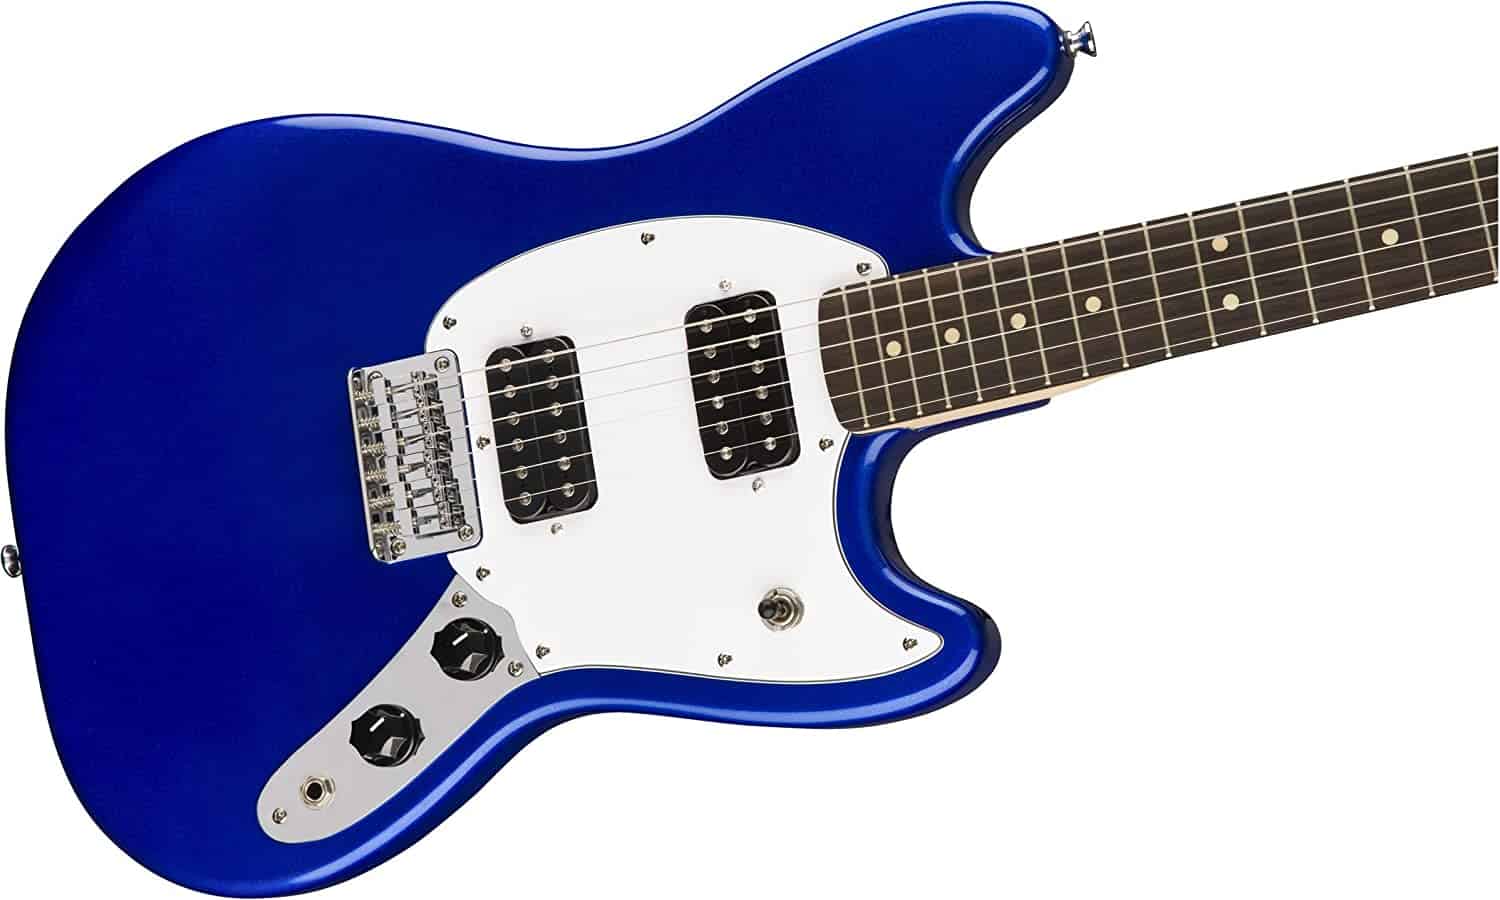 Best Squier guitar for beginners- Squier by Fender Bullet Mustang HH Short Scale